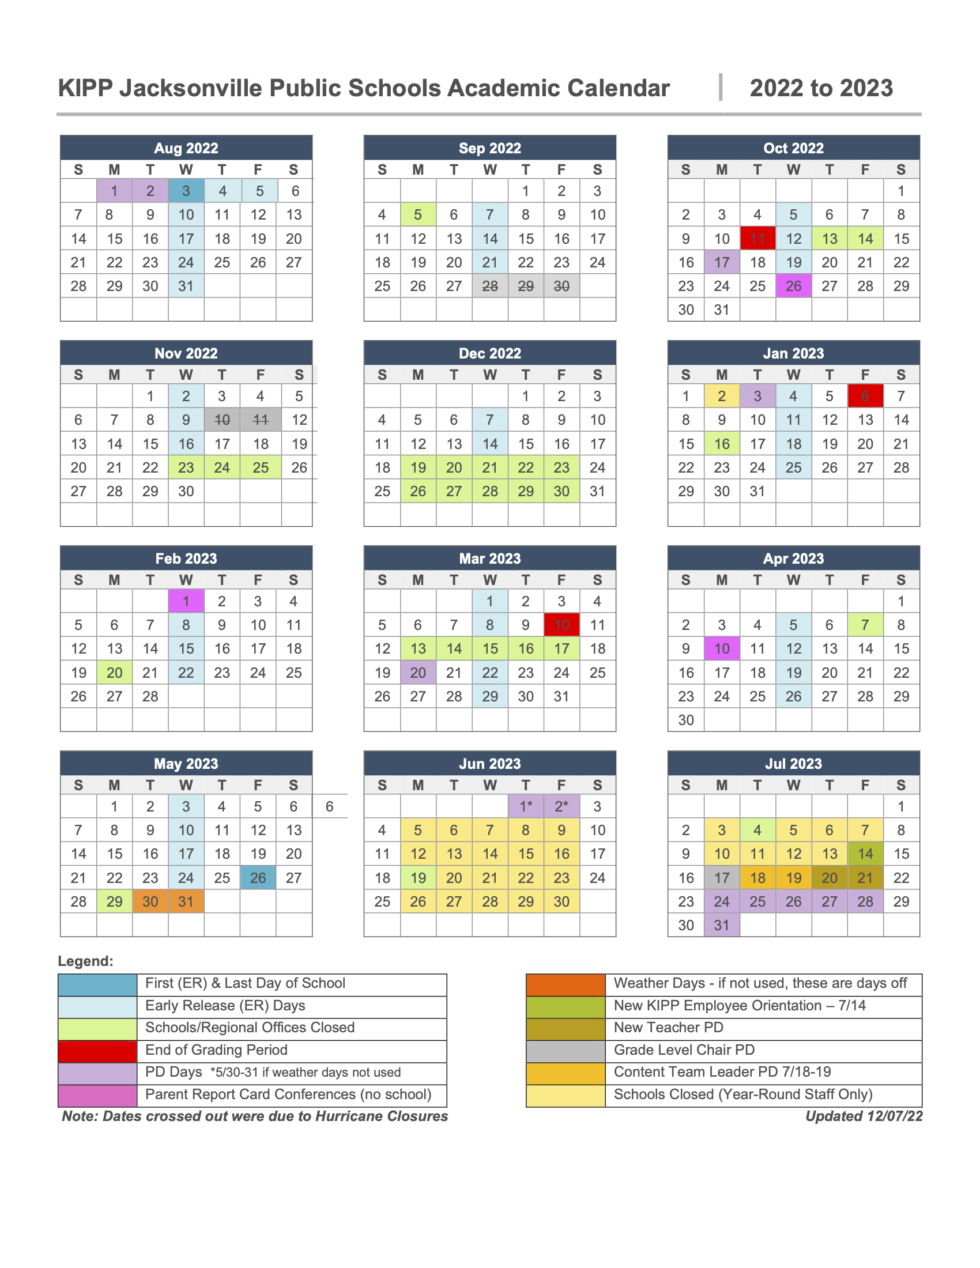 school-calendar-kipp-jacksonville-public-schools